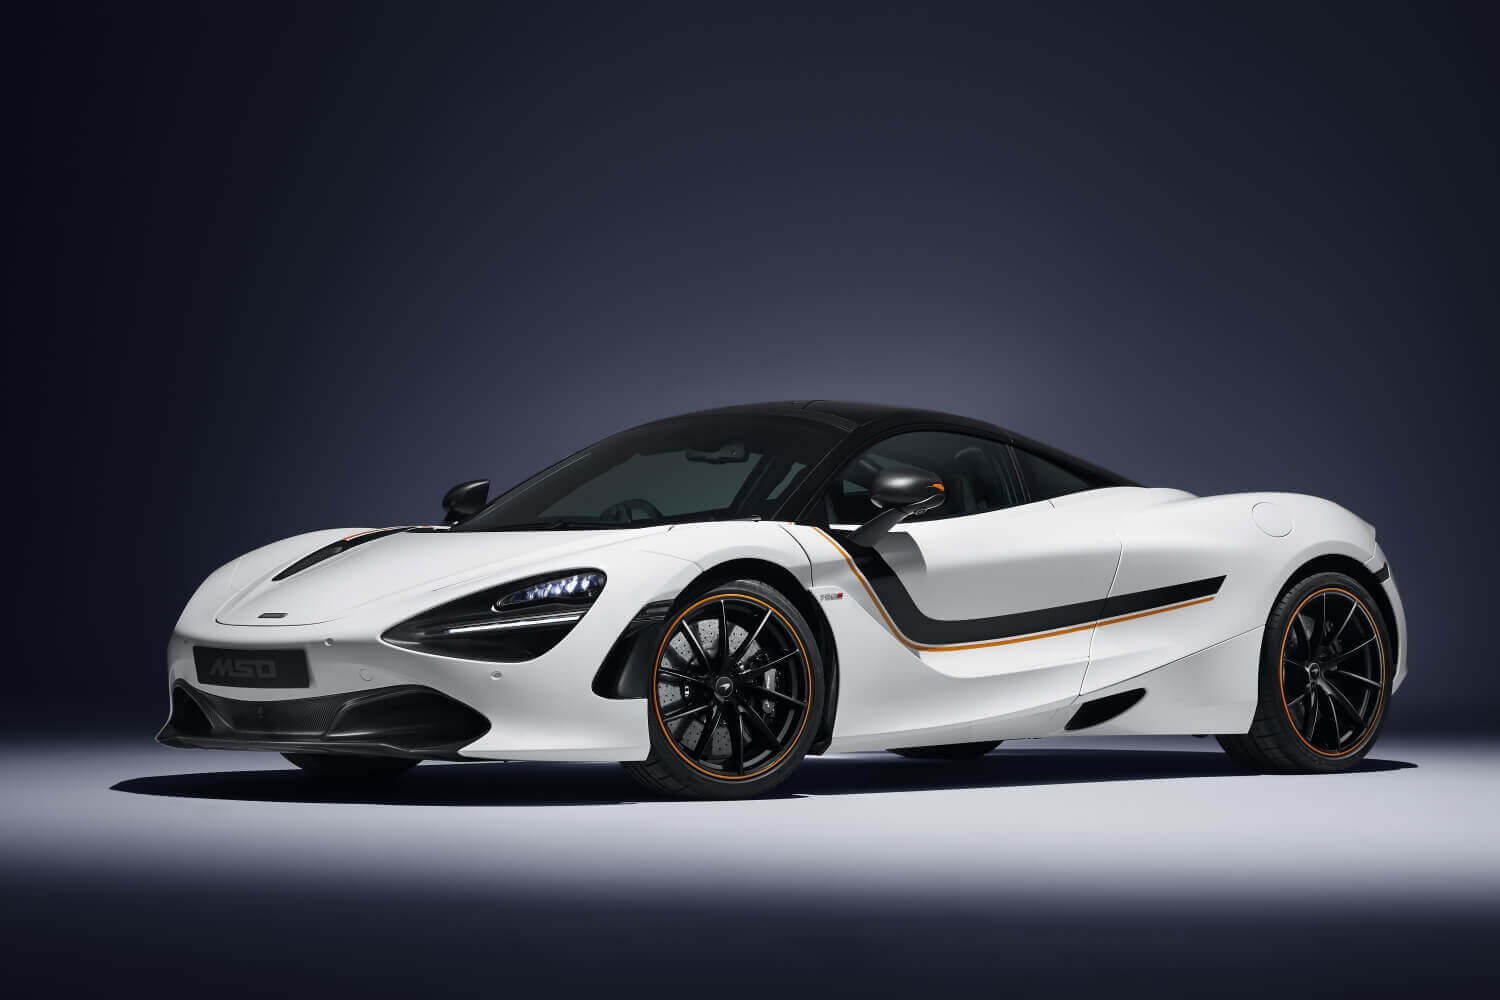 McLaren 720 S high-performance super car, models, specs, curb weight, dimensions